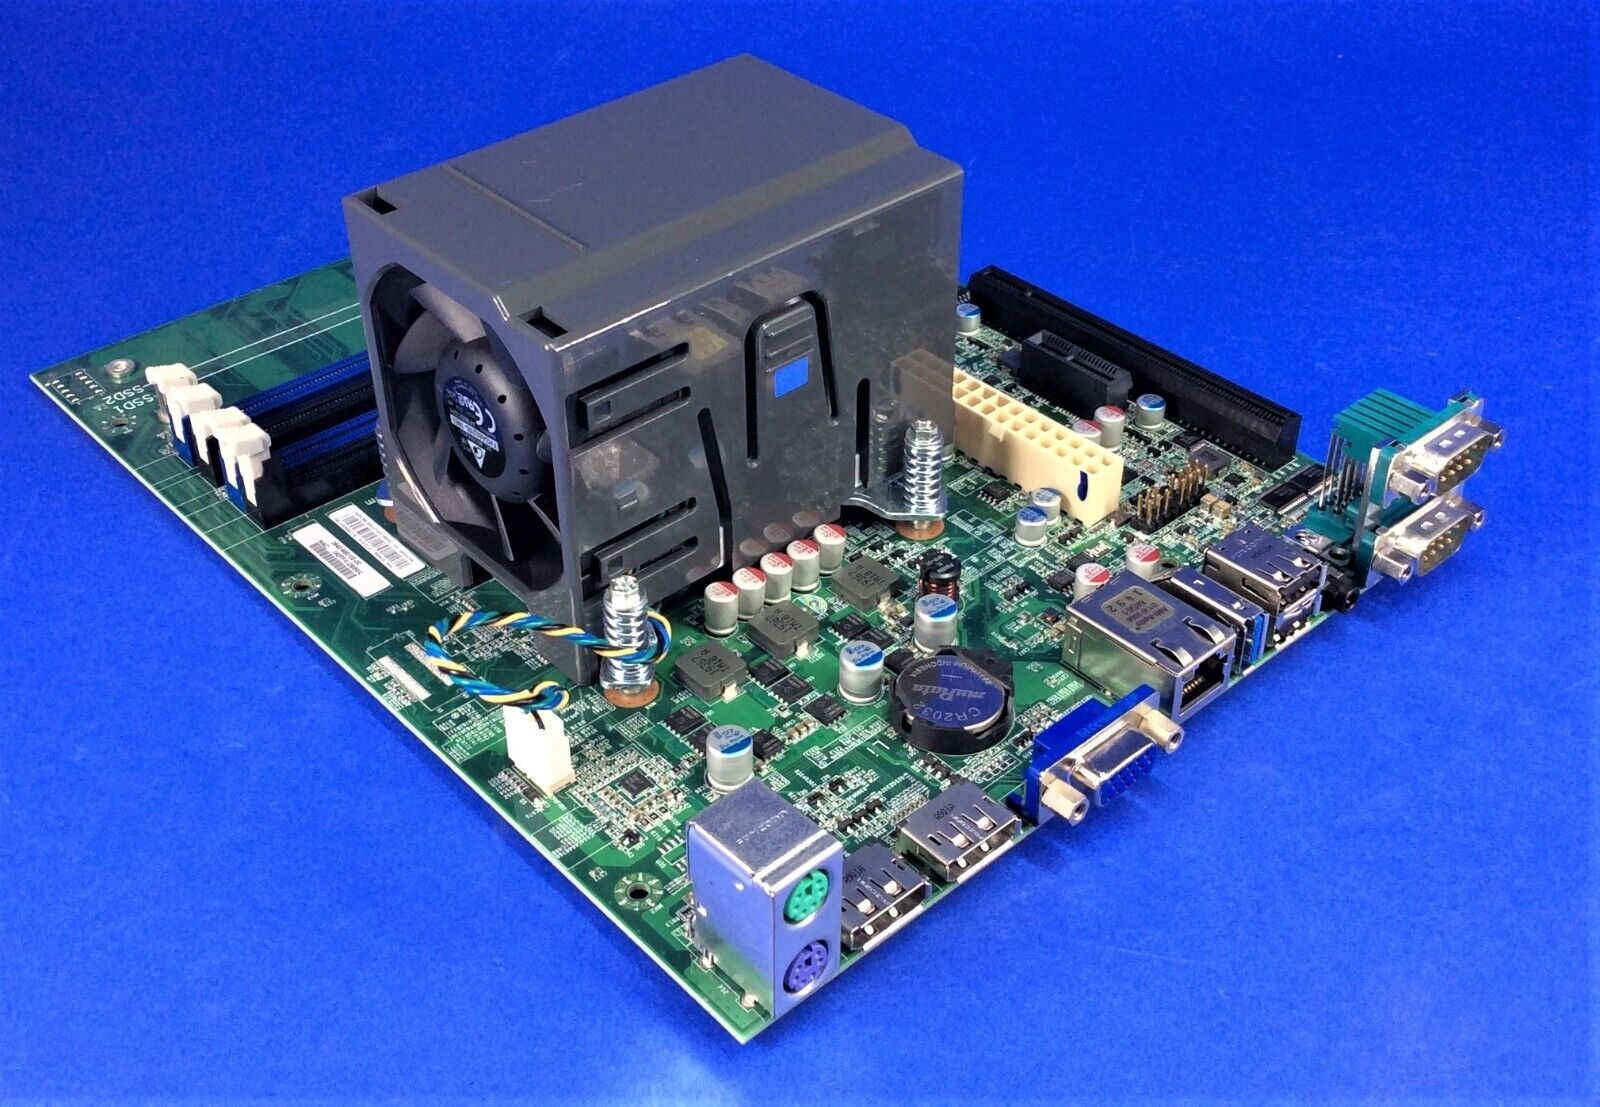 Toshiba 4900-786 System Motherboard + CPU Celeron G1820 & Heatsink FRU: 00GU218